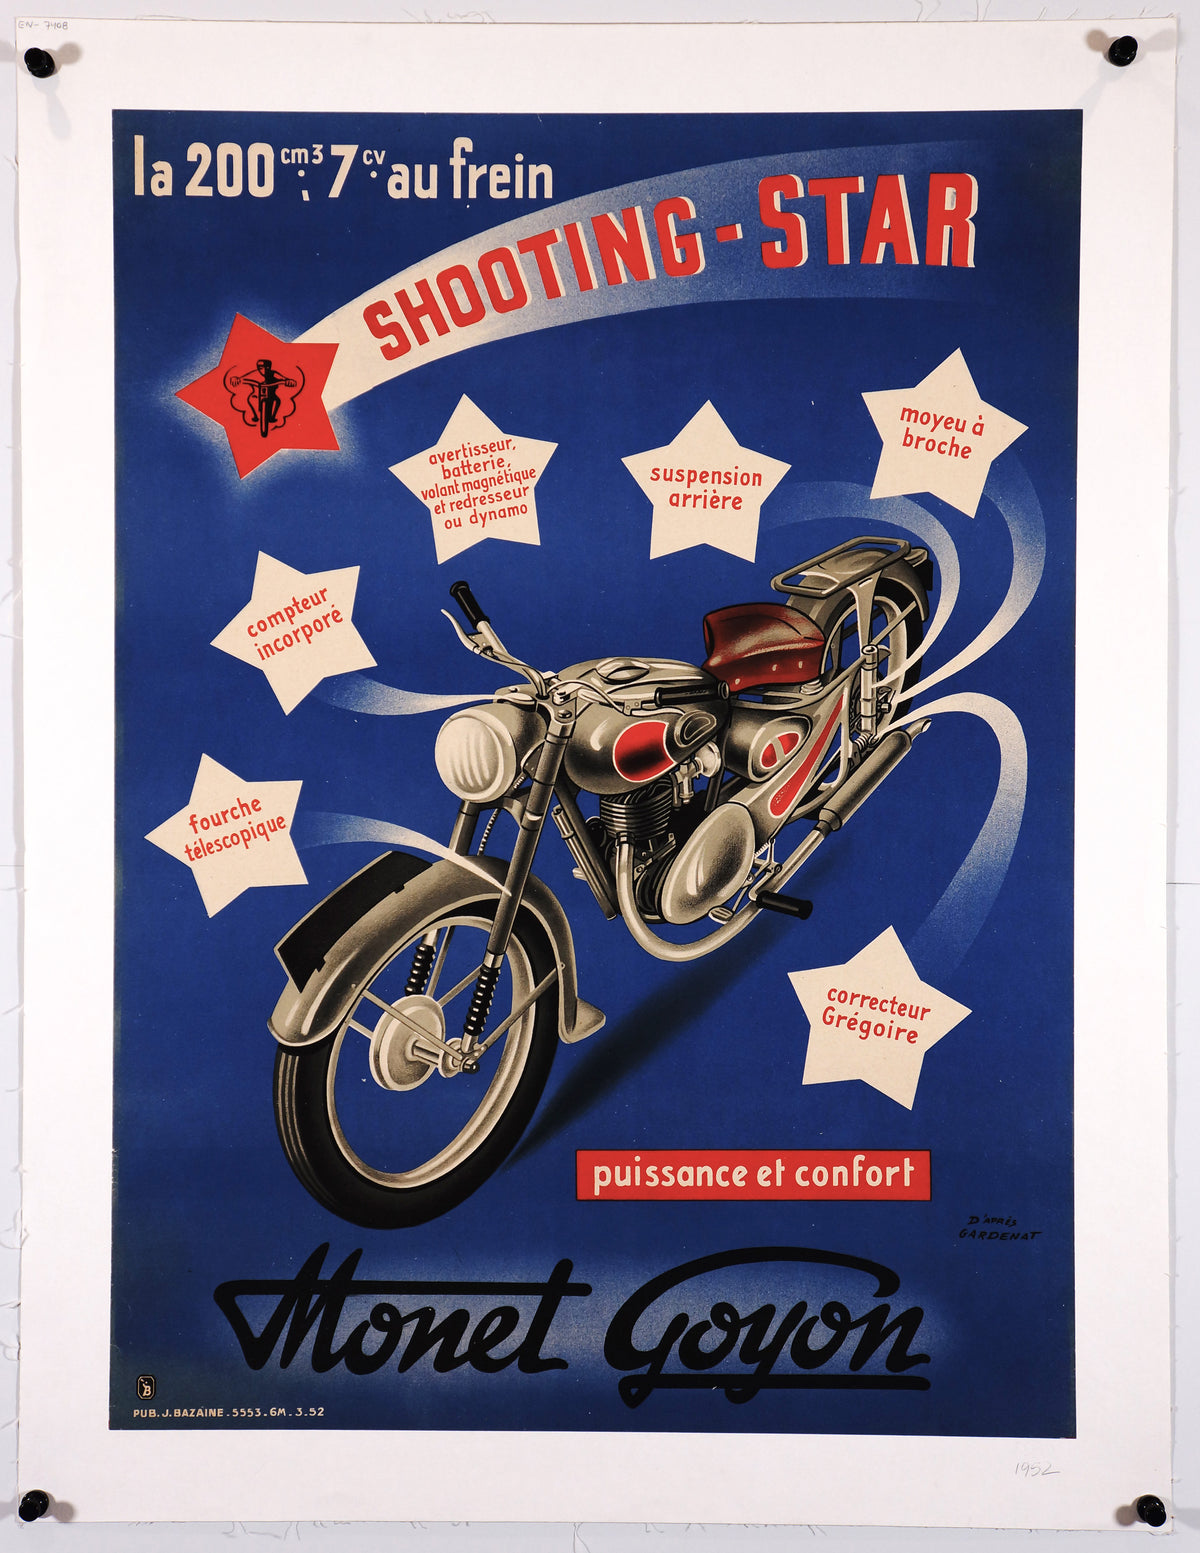 Shooting Star Monet Goyon - Authentic Vintage Poster